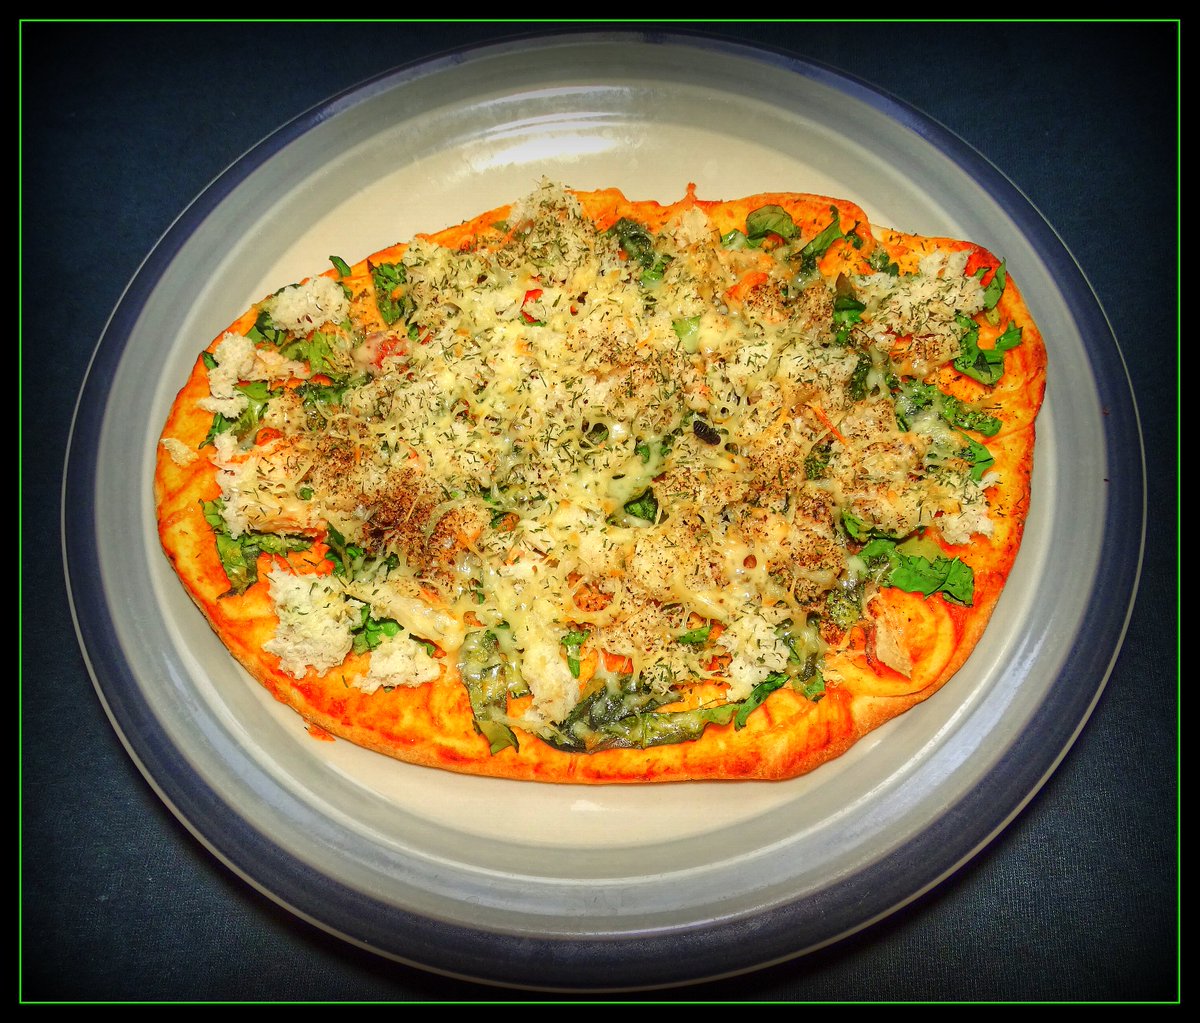 Crab & Spinach Naan Bread Pizza #dinerinmymind #homecooking #food #cookingathome #crab #seafood #spinach #naanbread #pizza #marinarasauce #smokedgoudacheese #garlic #cilantro #Manitoba